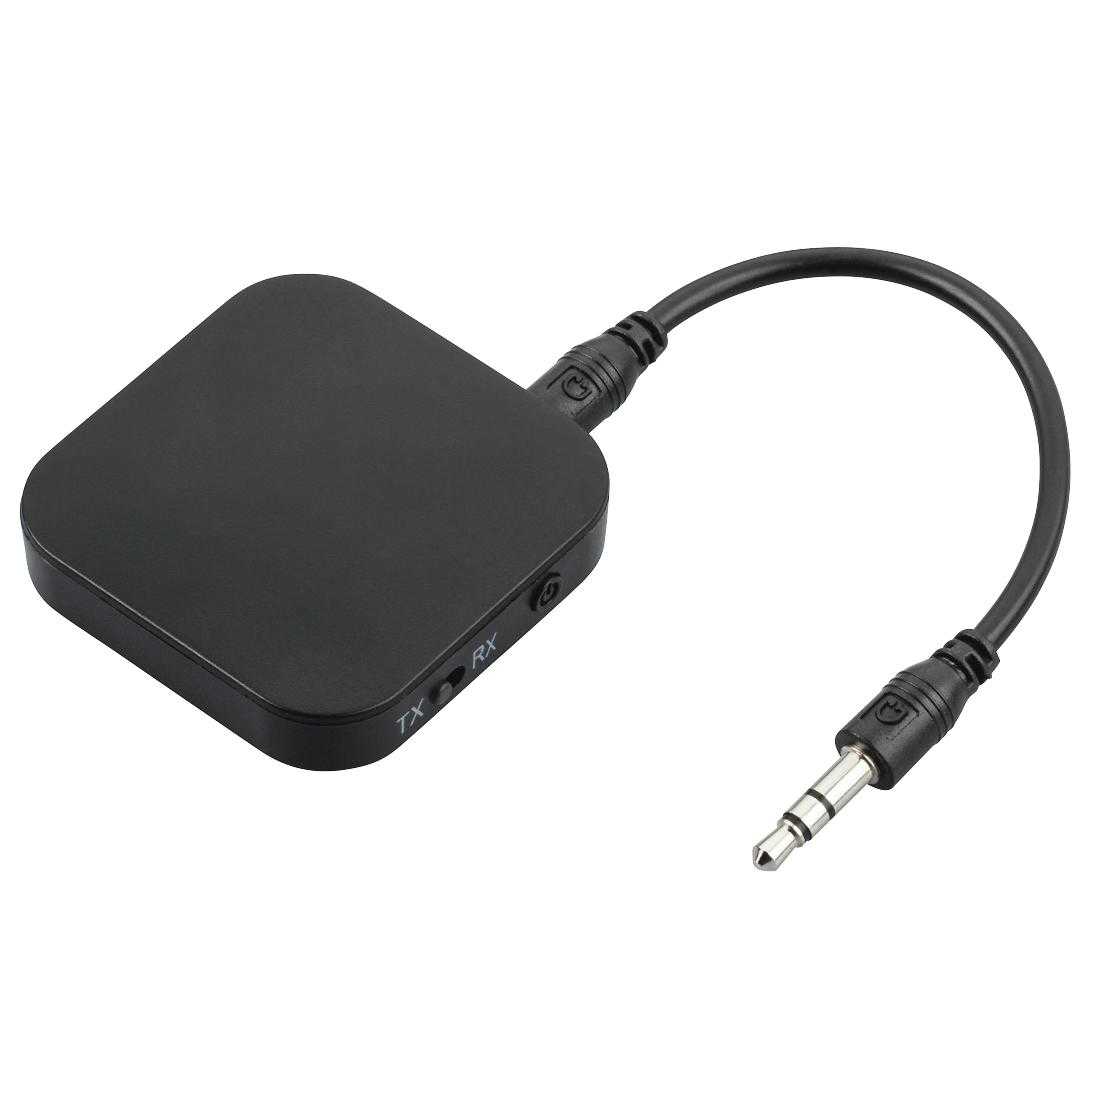 HAMA 184093 Bluetooth-Audio-Sender/Empfänger, 2in1-Adapter